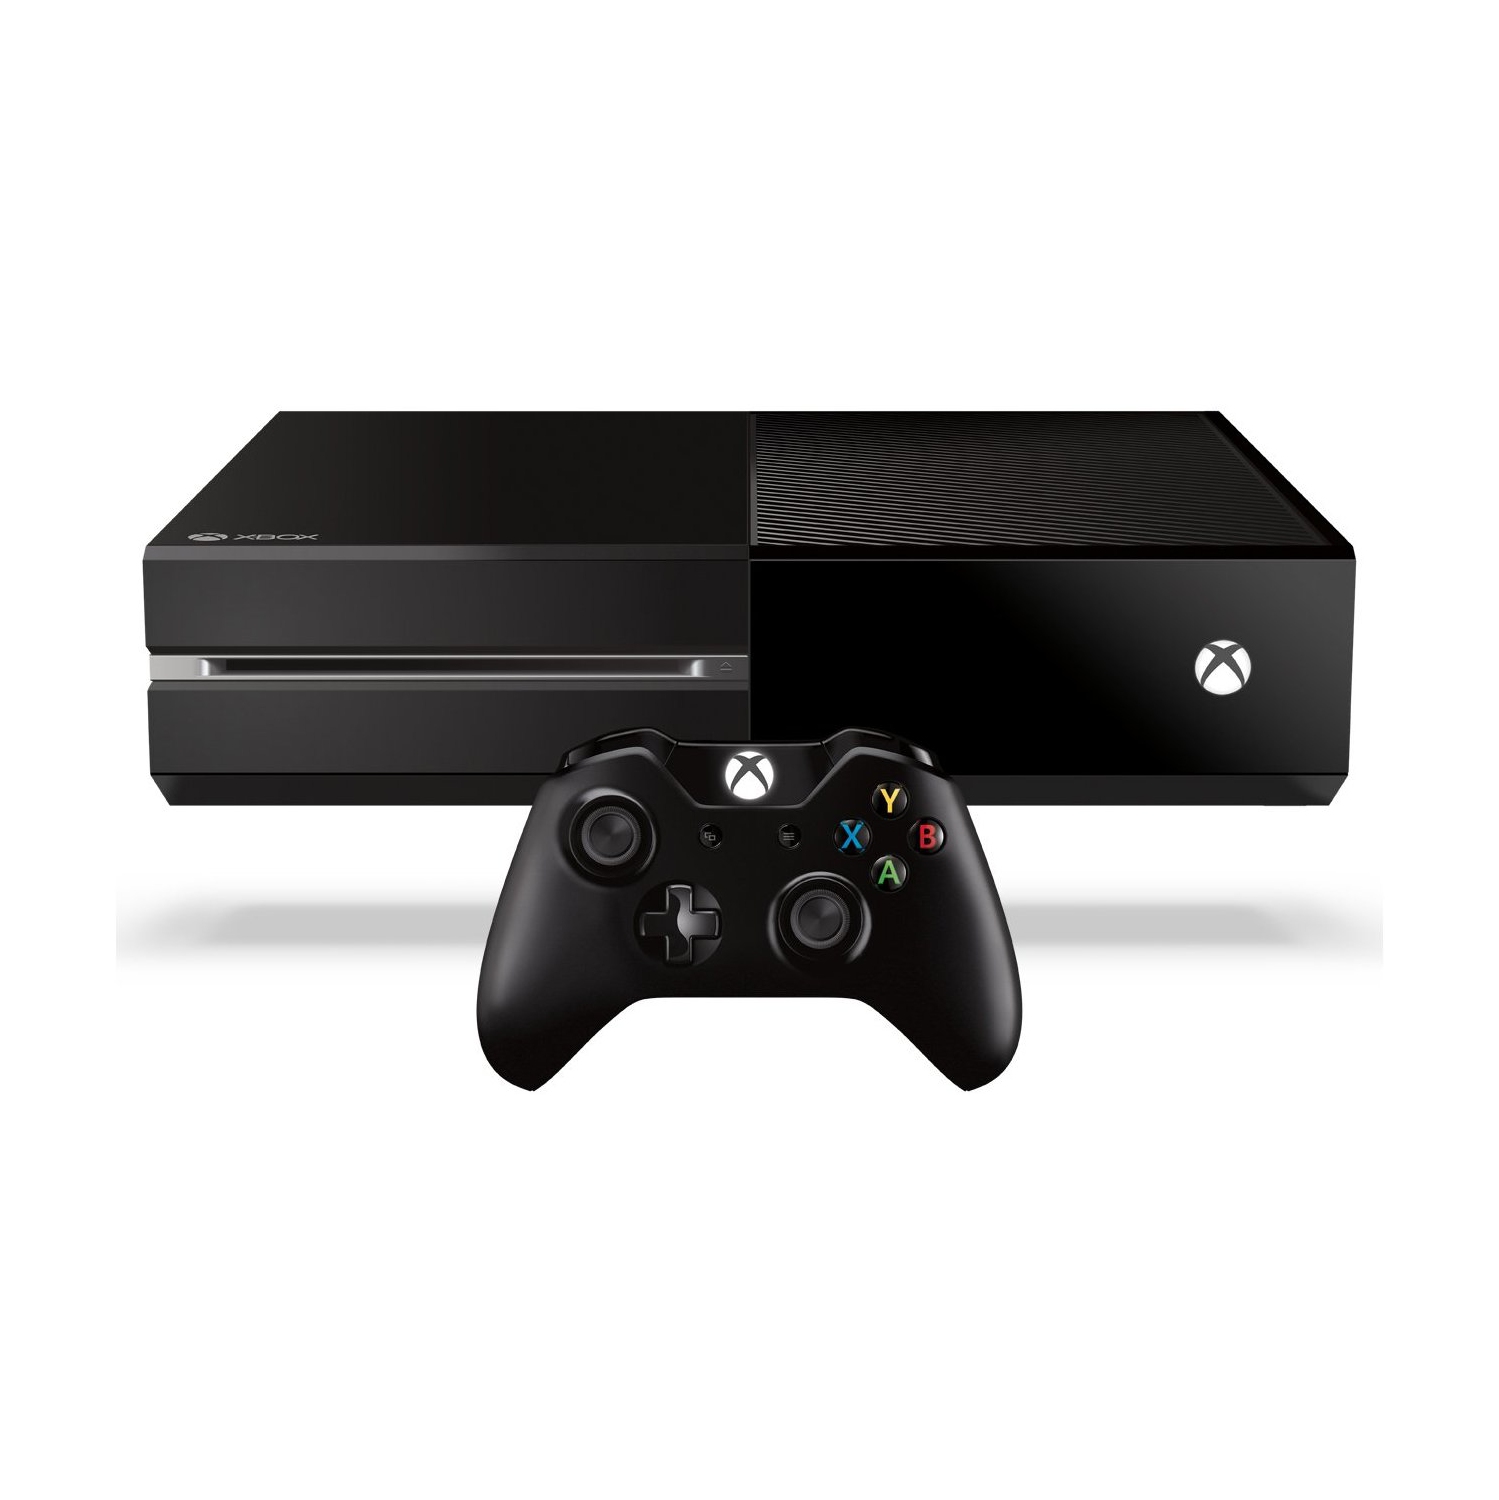 Refurbished (Good) Microsoft Xbox One 500gb Console - Black